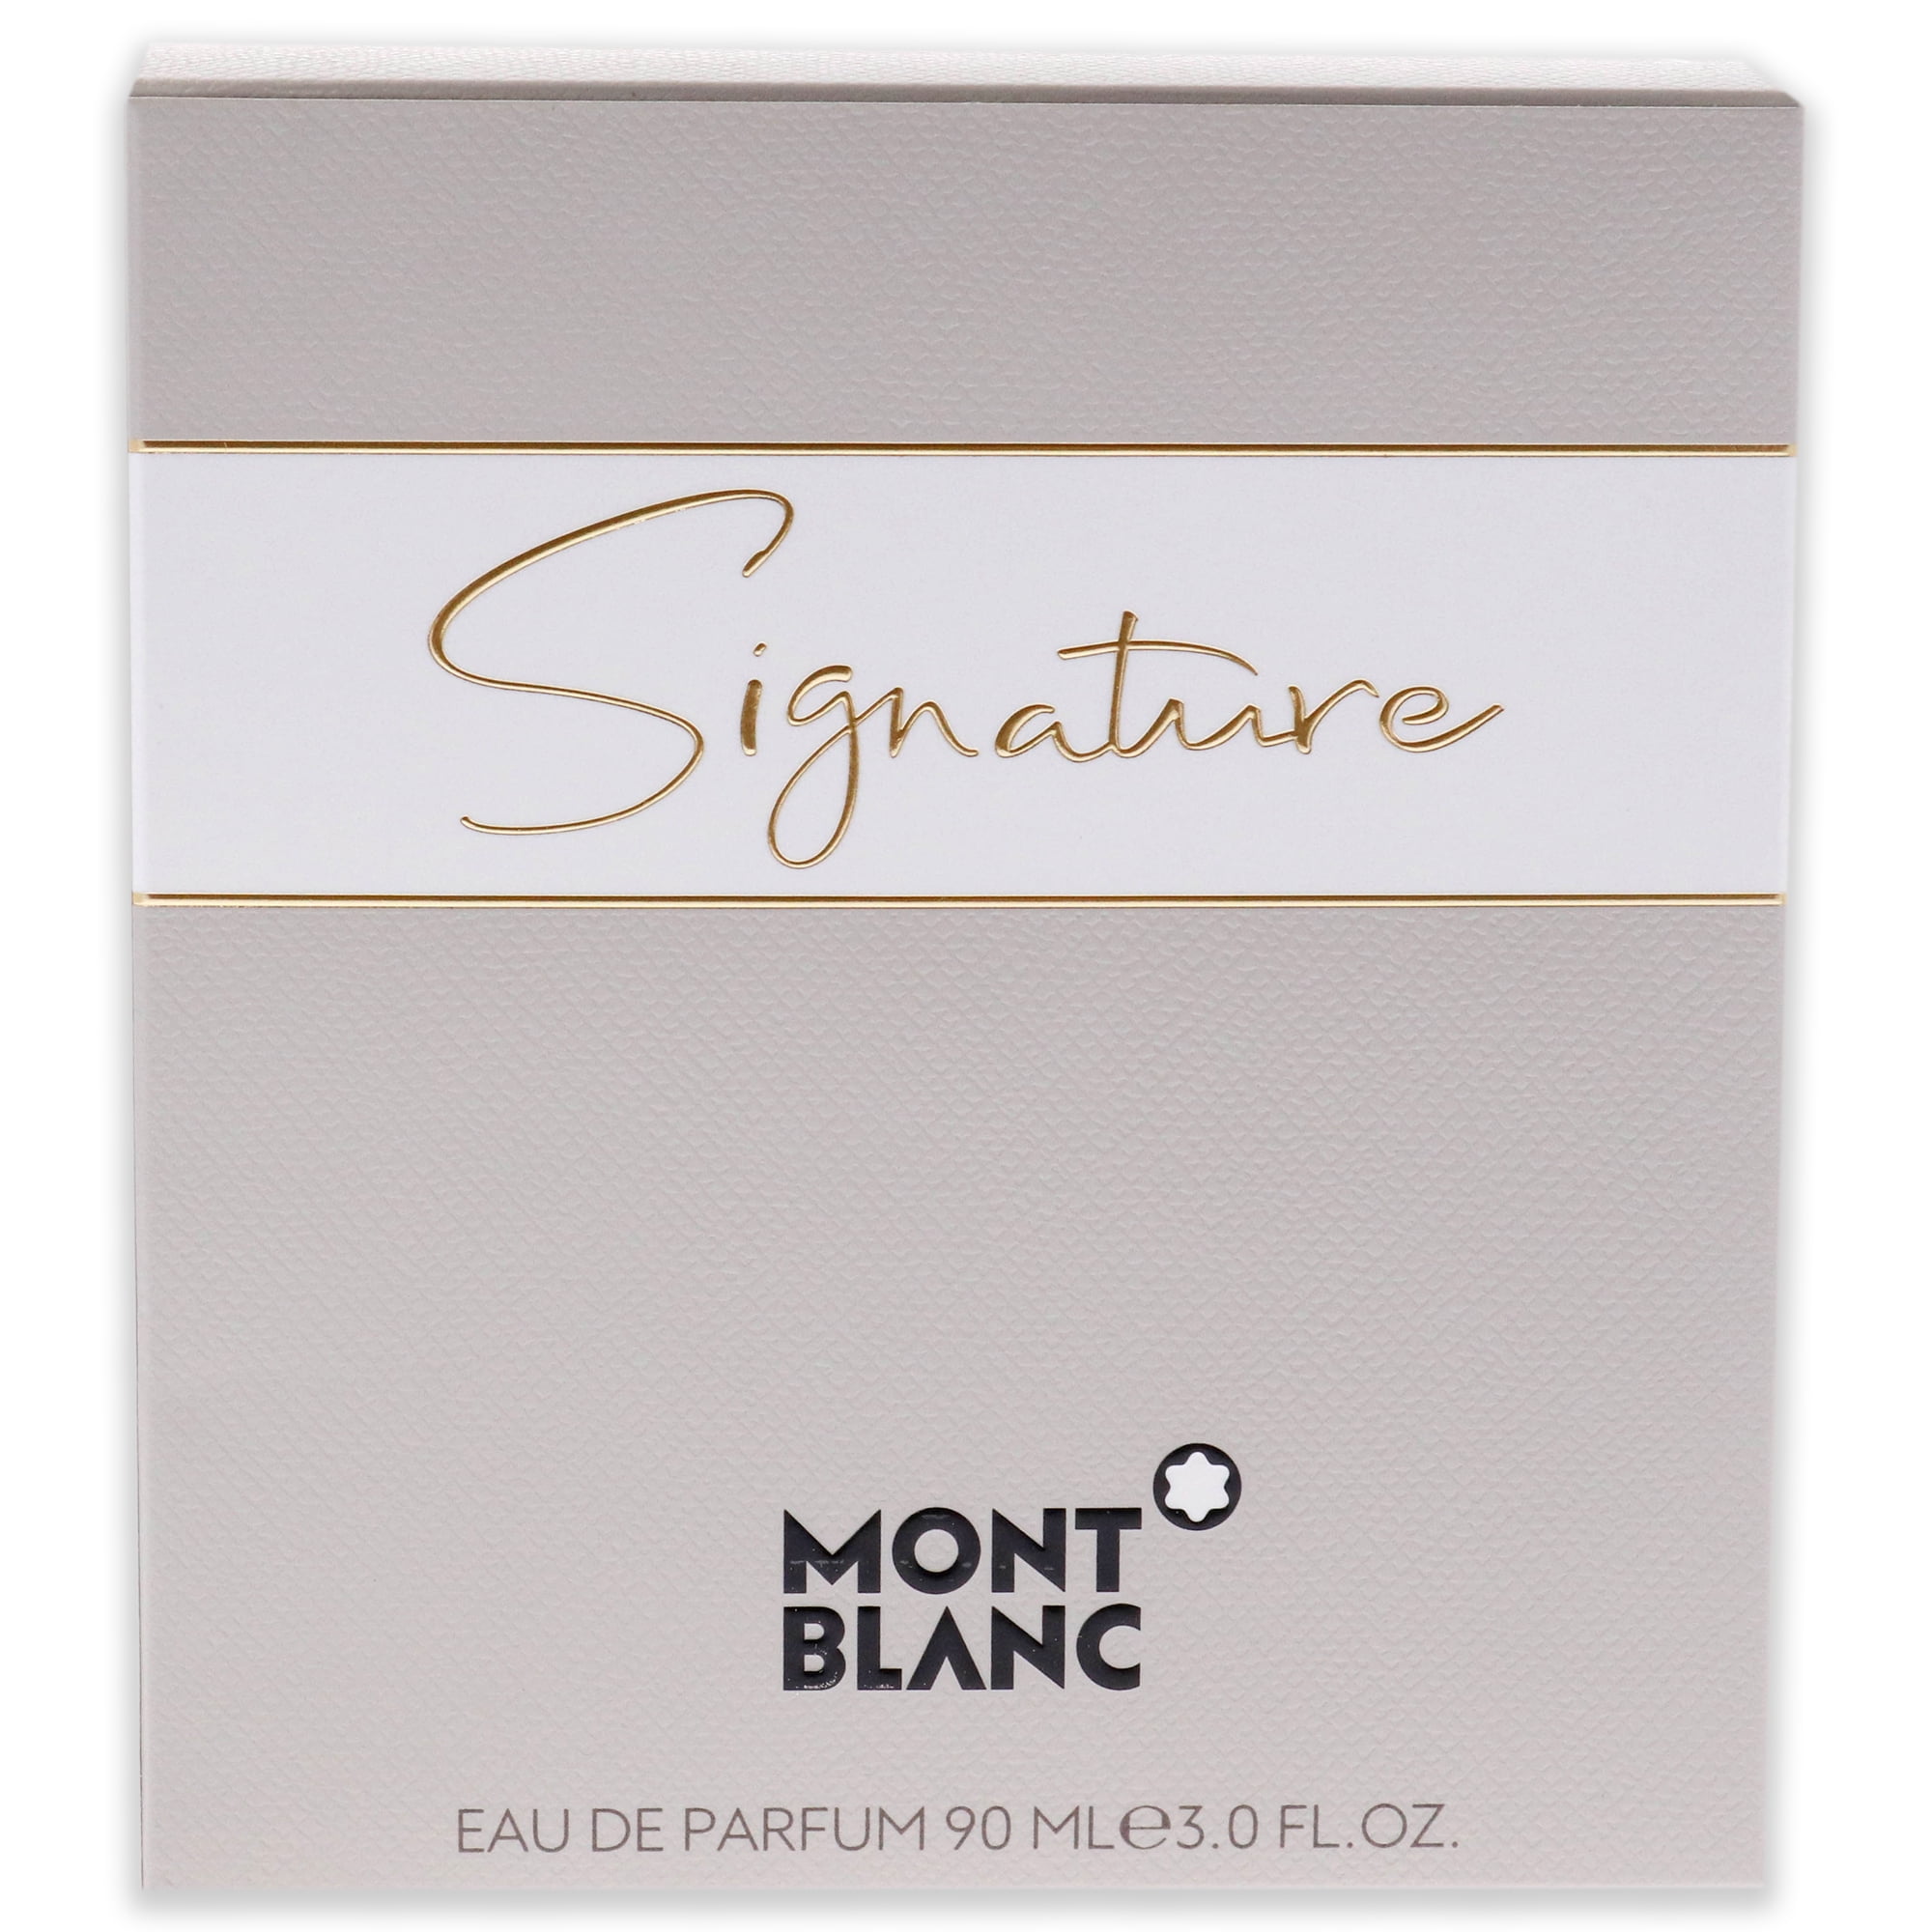 Mont Blanc Signature 3.0 oz EDP spray+ .25 EDP spray+ 3.3 lotion